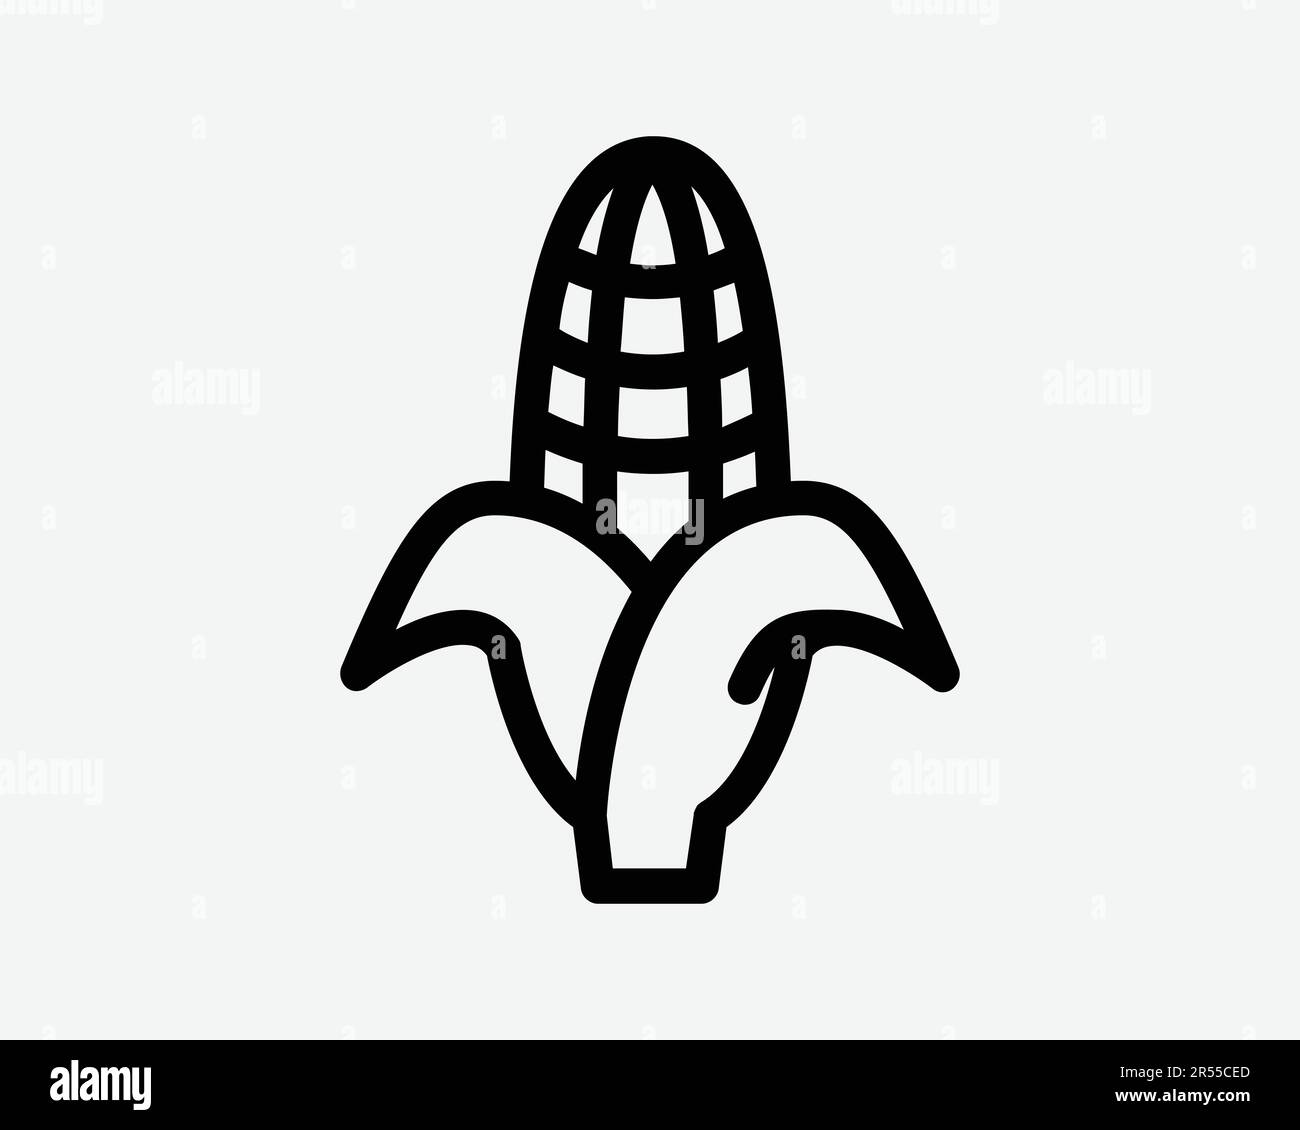 Corn Icon. Grain Maize Farm Agriculture Food Farming Harvest Crop Produce Corncob Sign Symbol Black Artwork Graphic Illustration Clipart EPS Vector Stock Vector